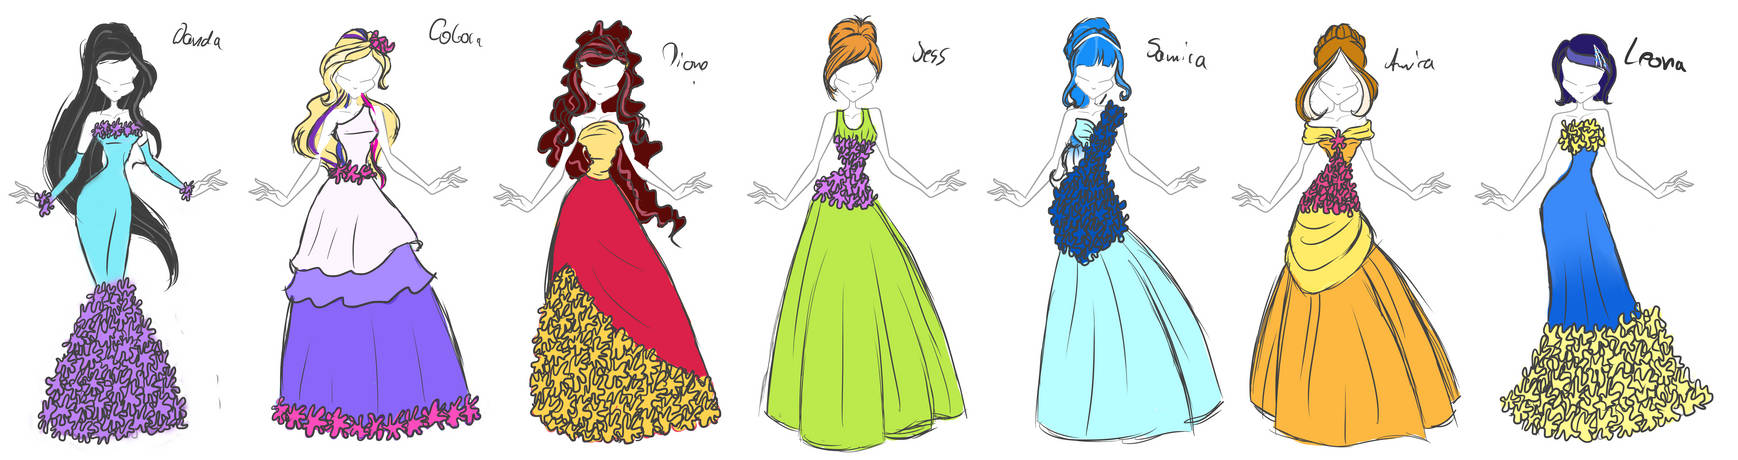 Sparx Flower Princess sketches